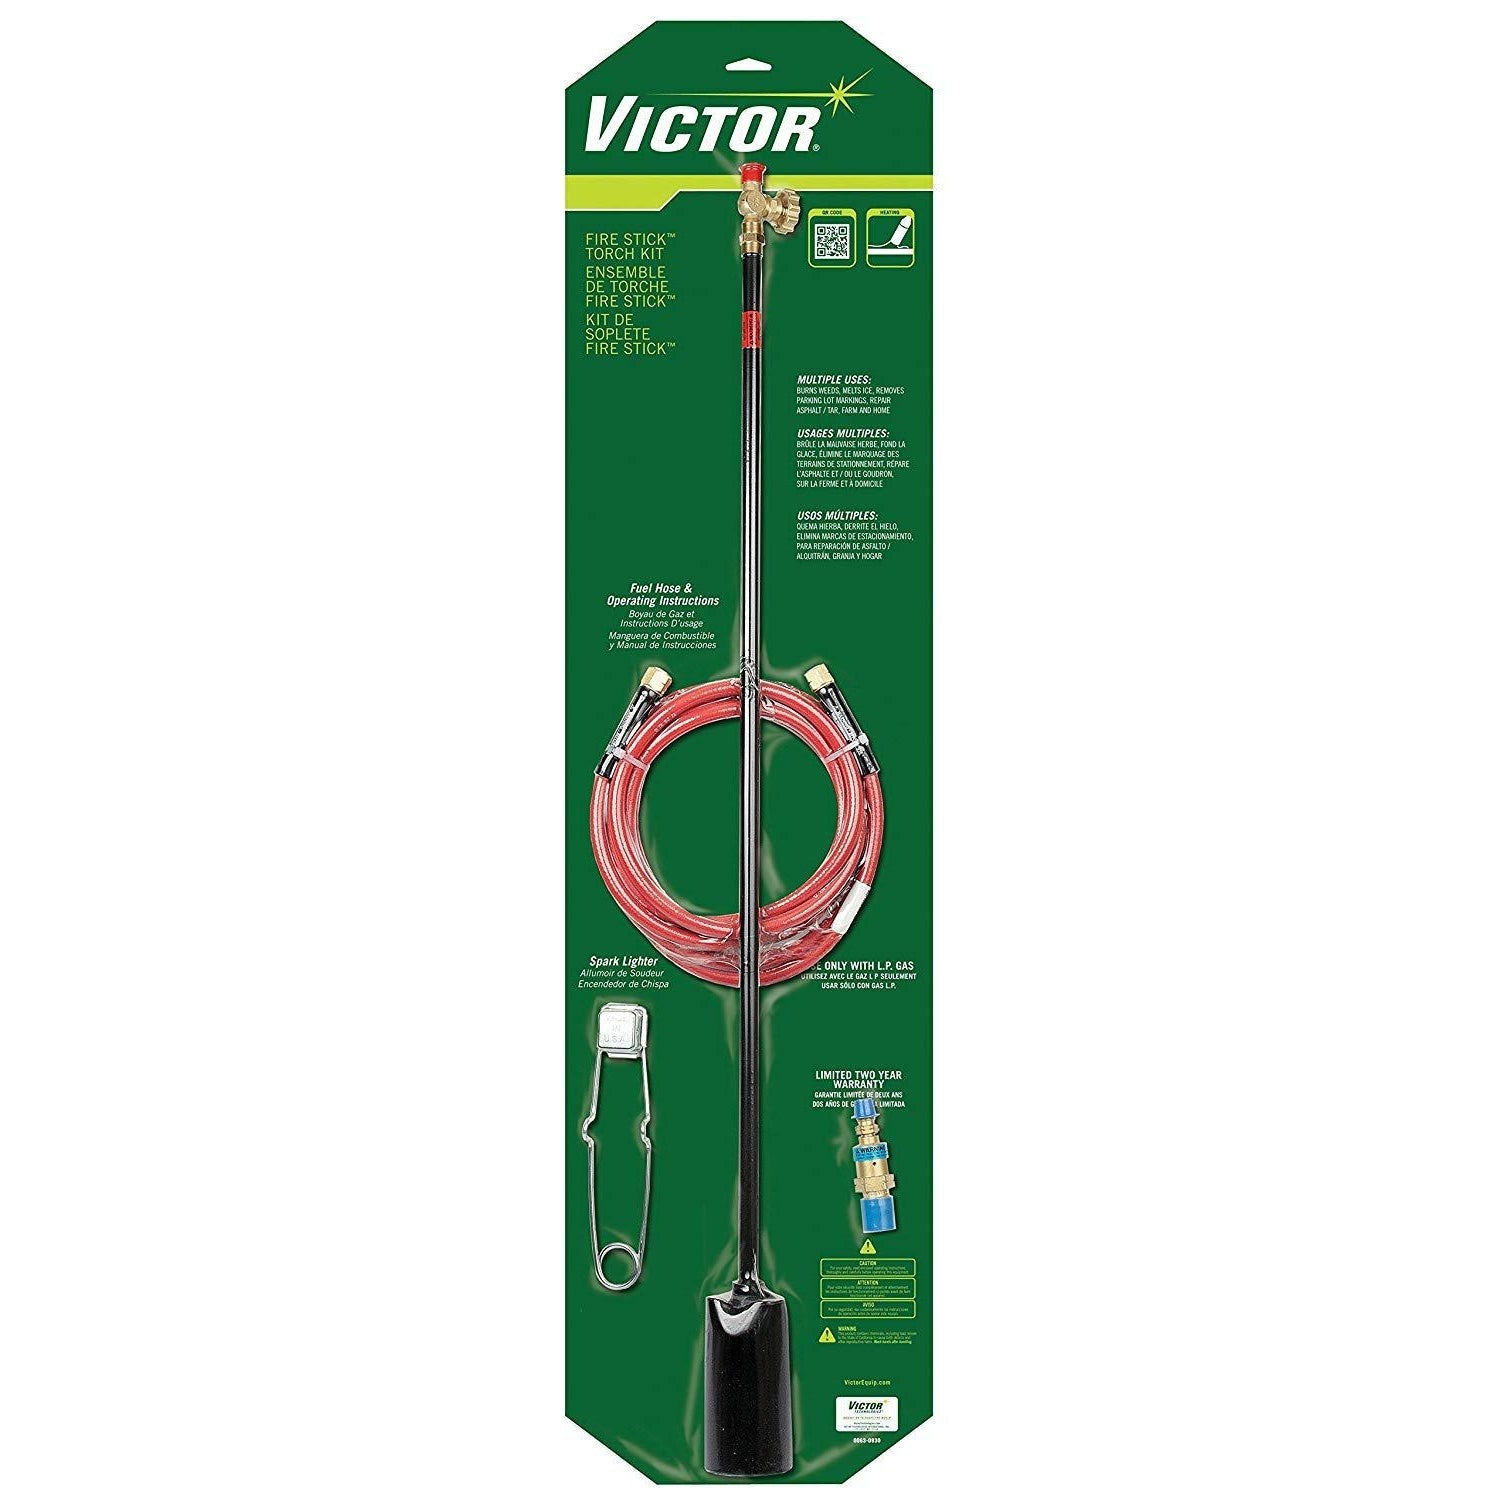 Victor HT-500 Torch Kit, Fire-Stick, 500,000 BTU's - 0384-1261